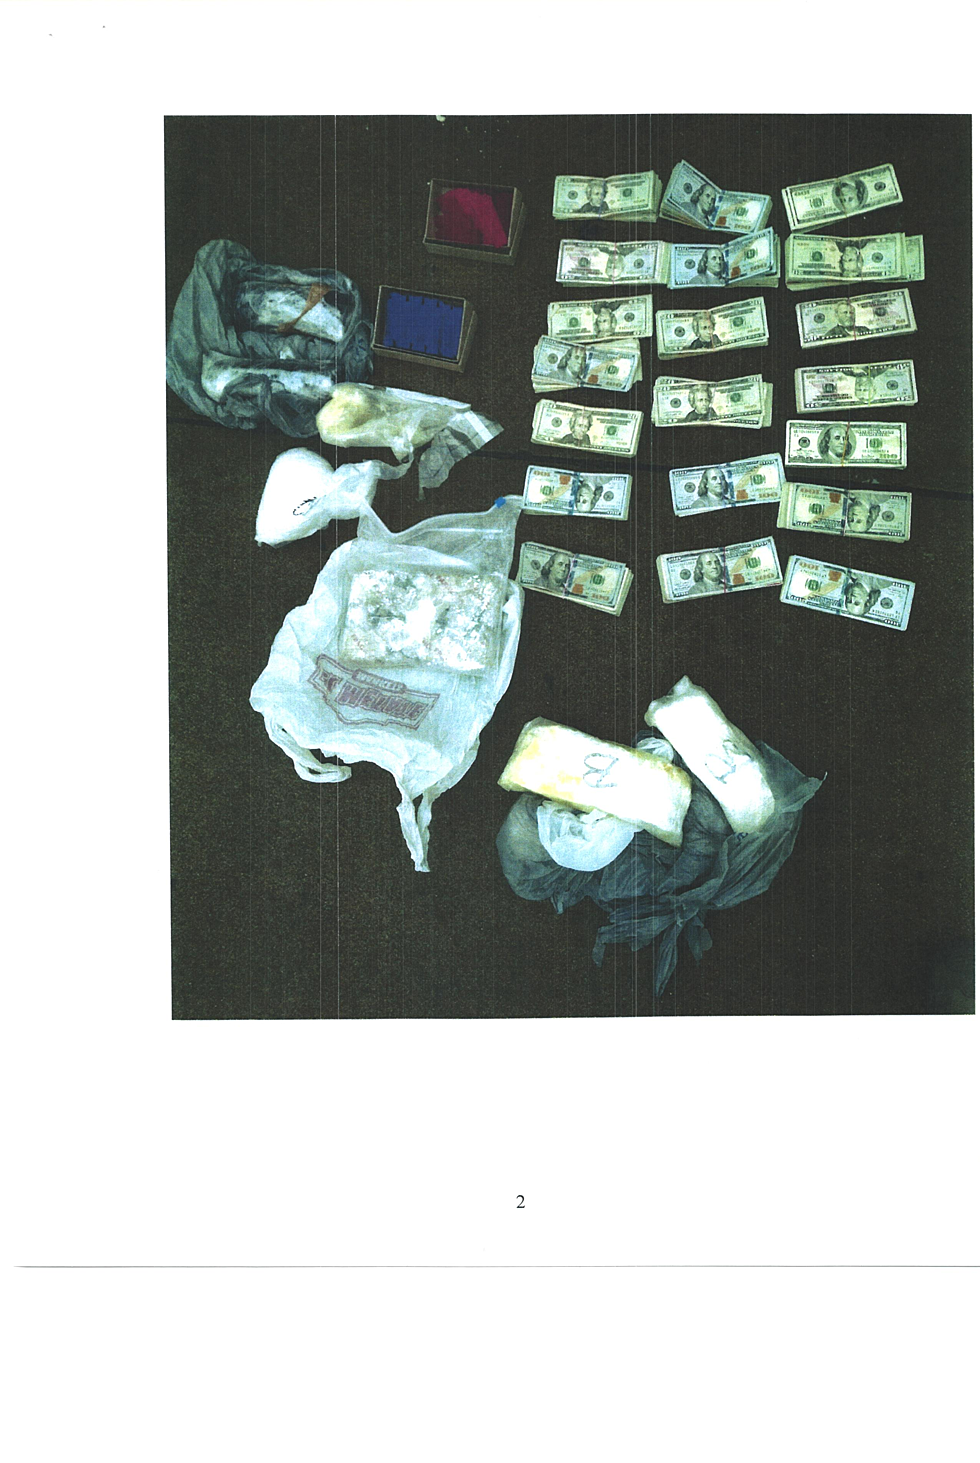 Second Broome County Million Dollar Drug Bust Sentence